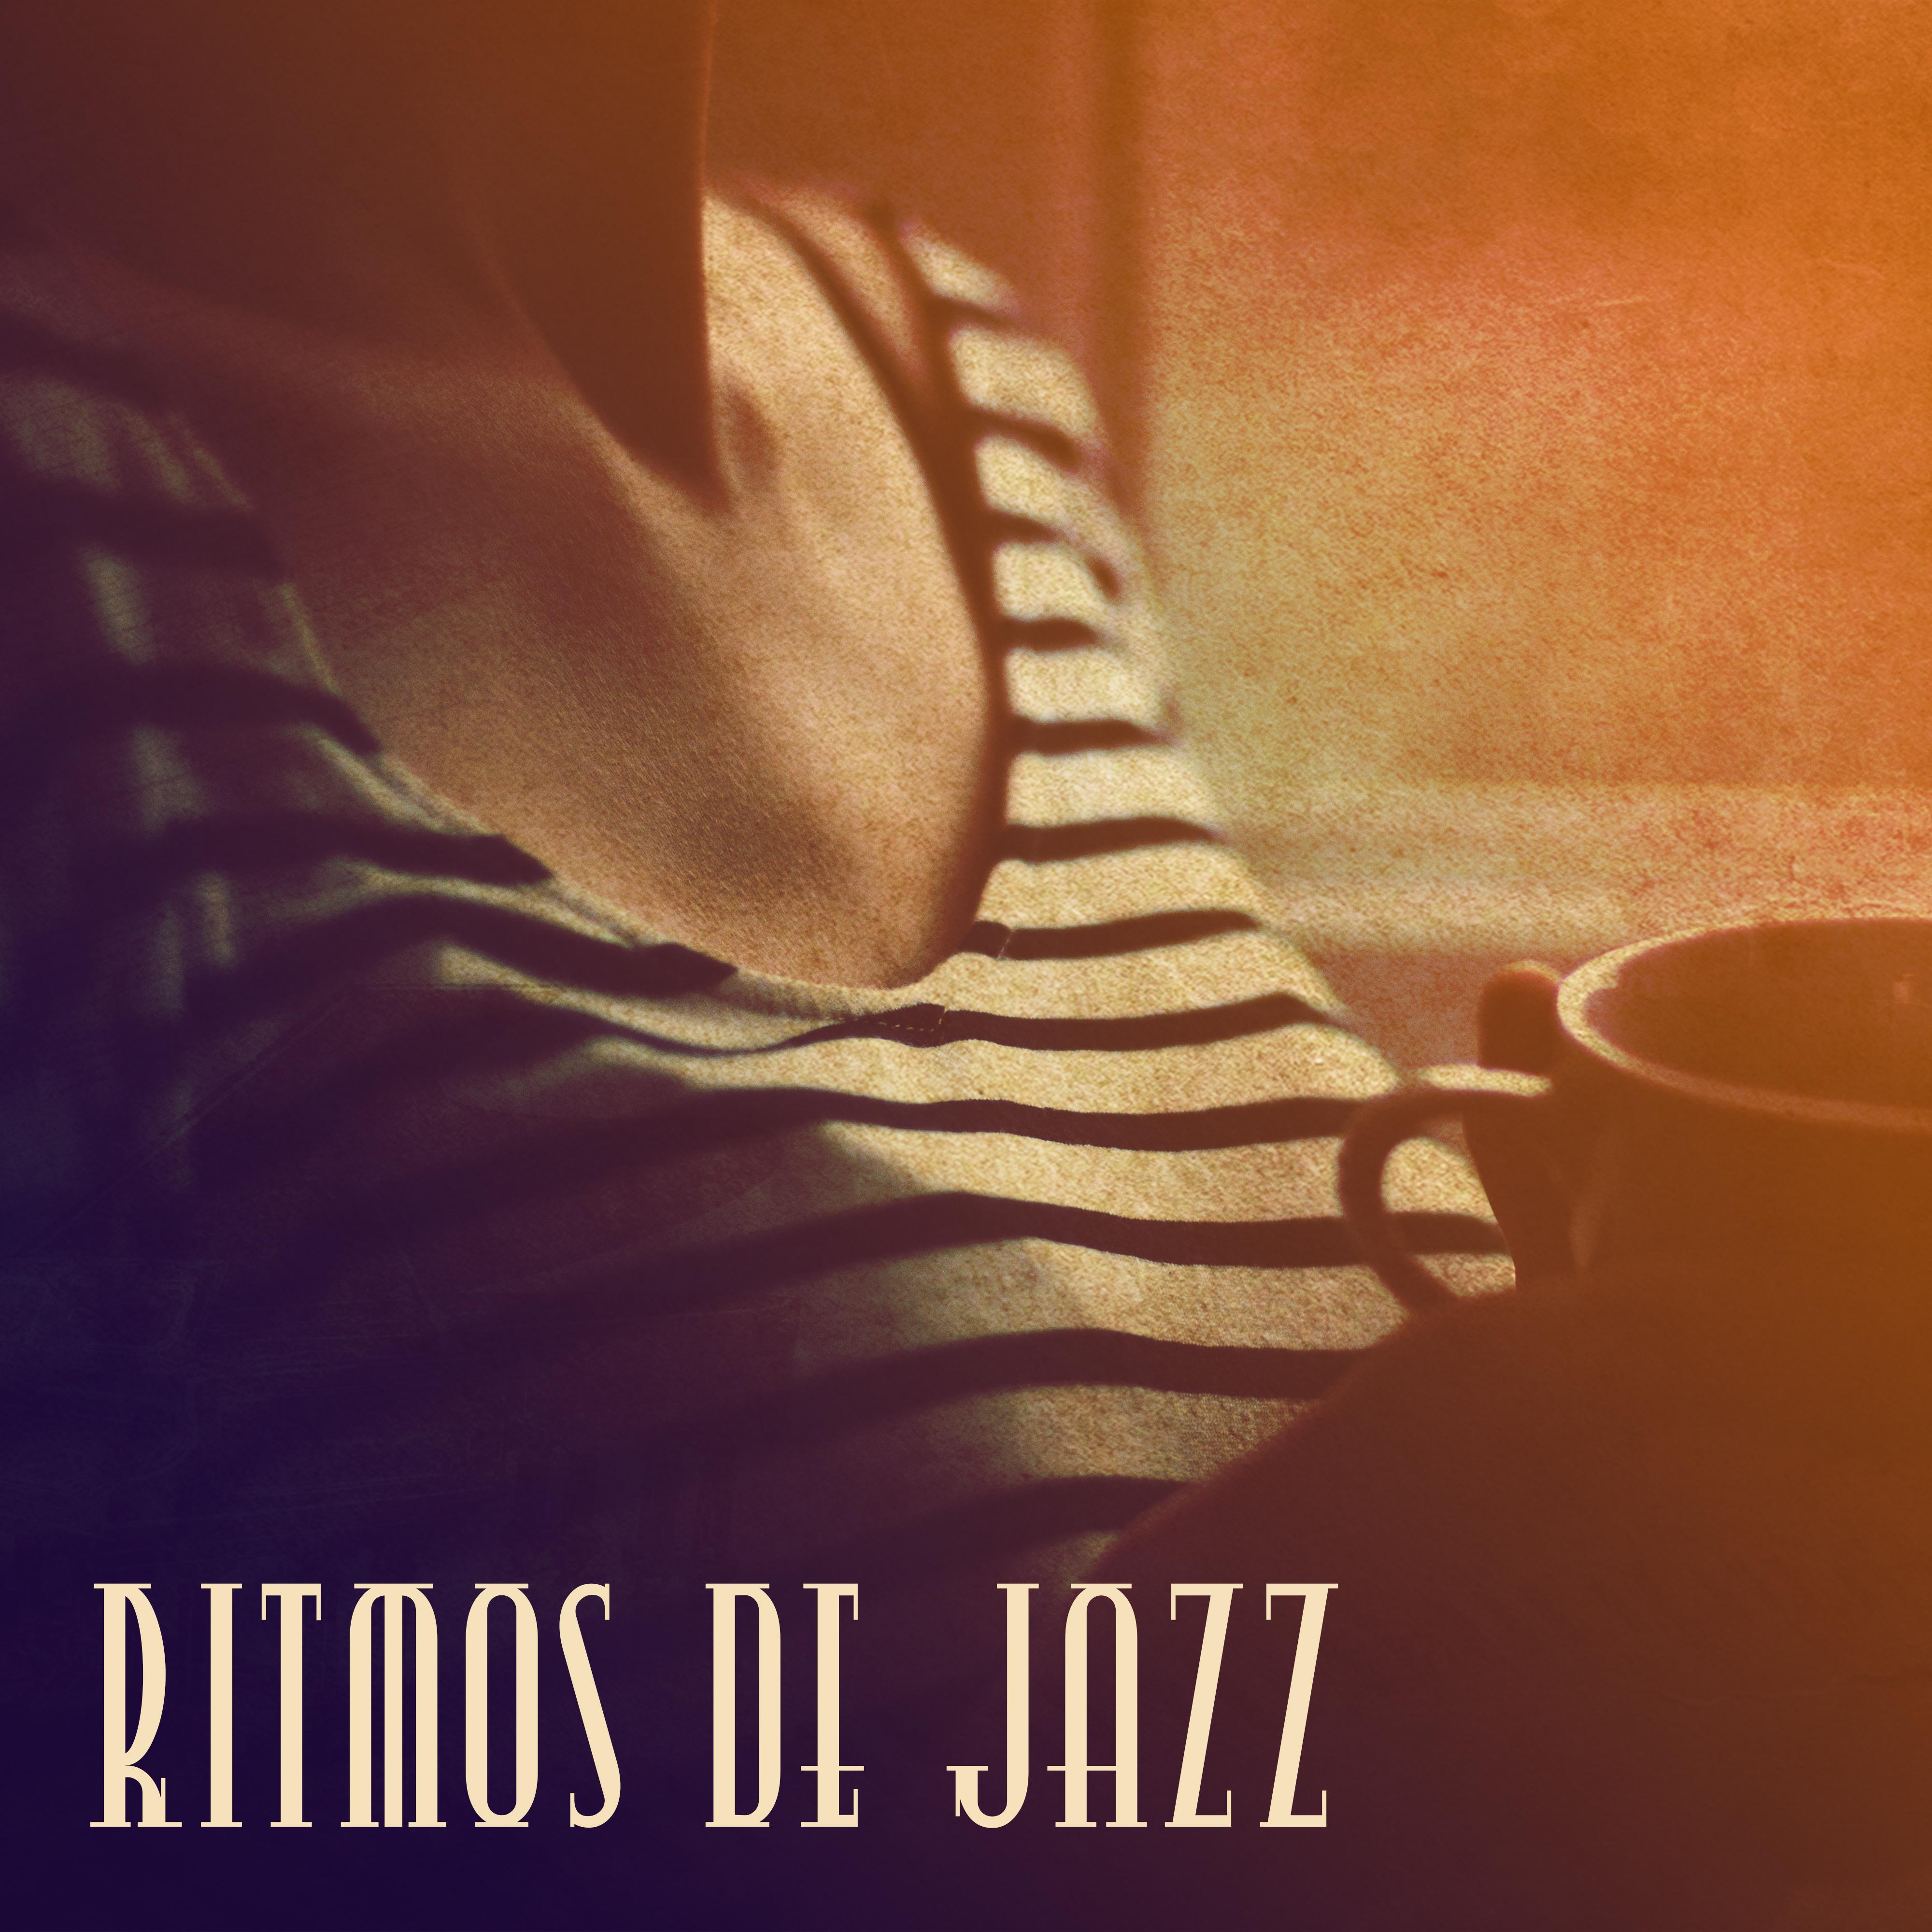 Ritmos de Jazz